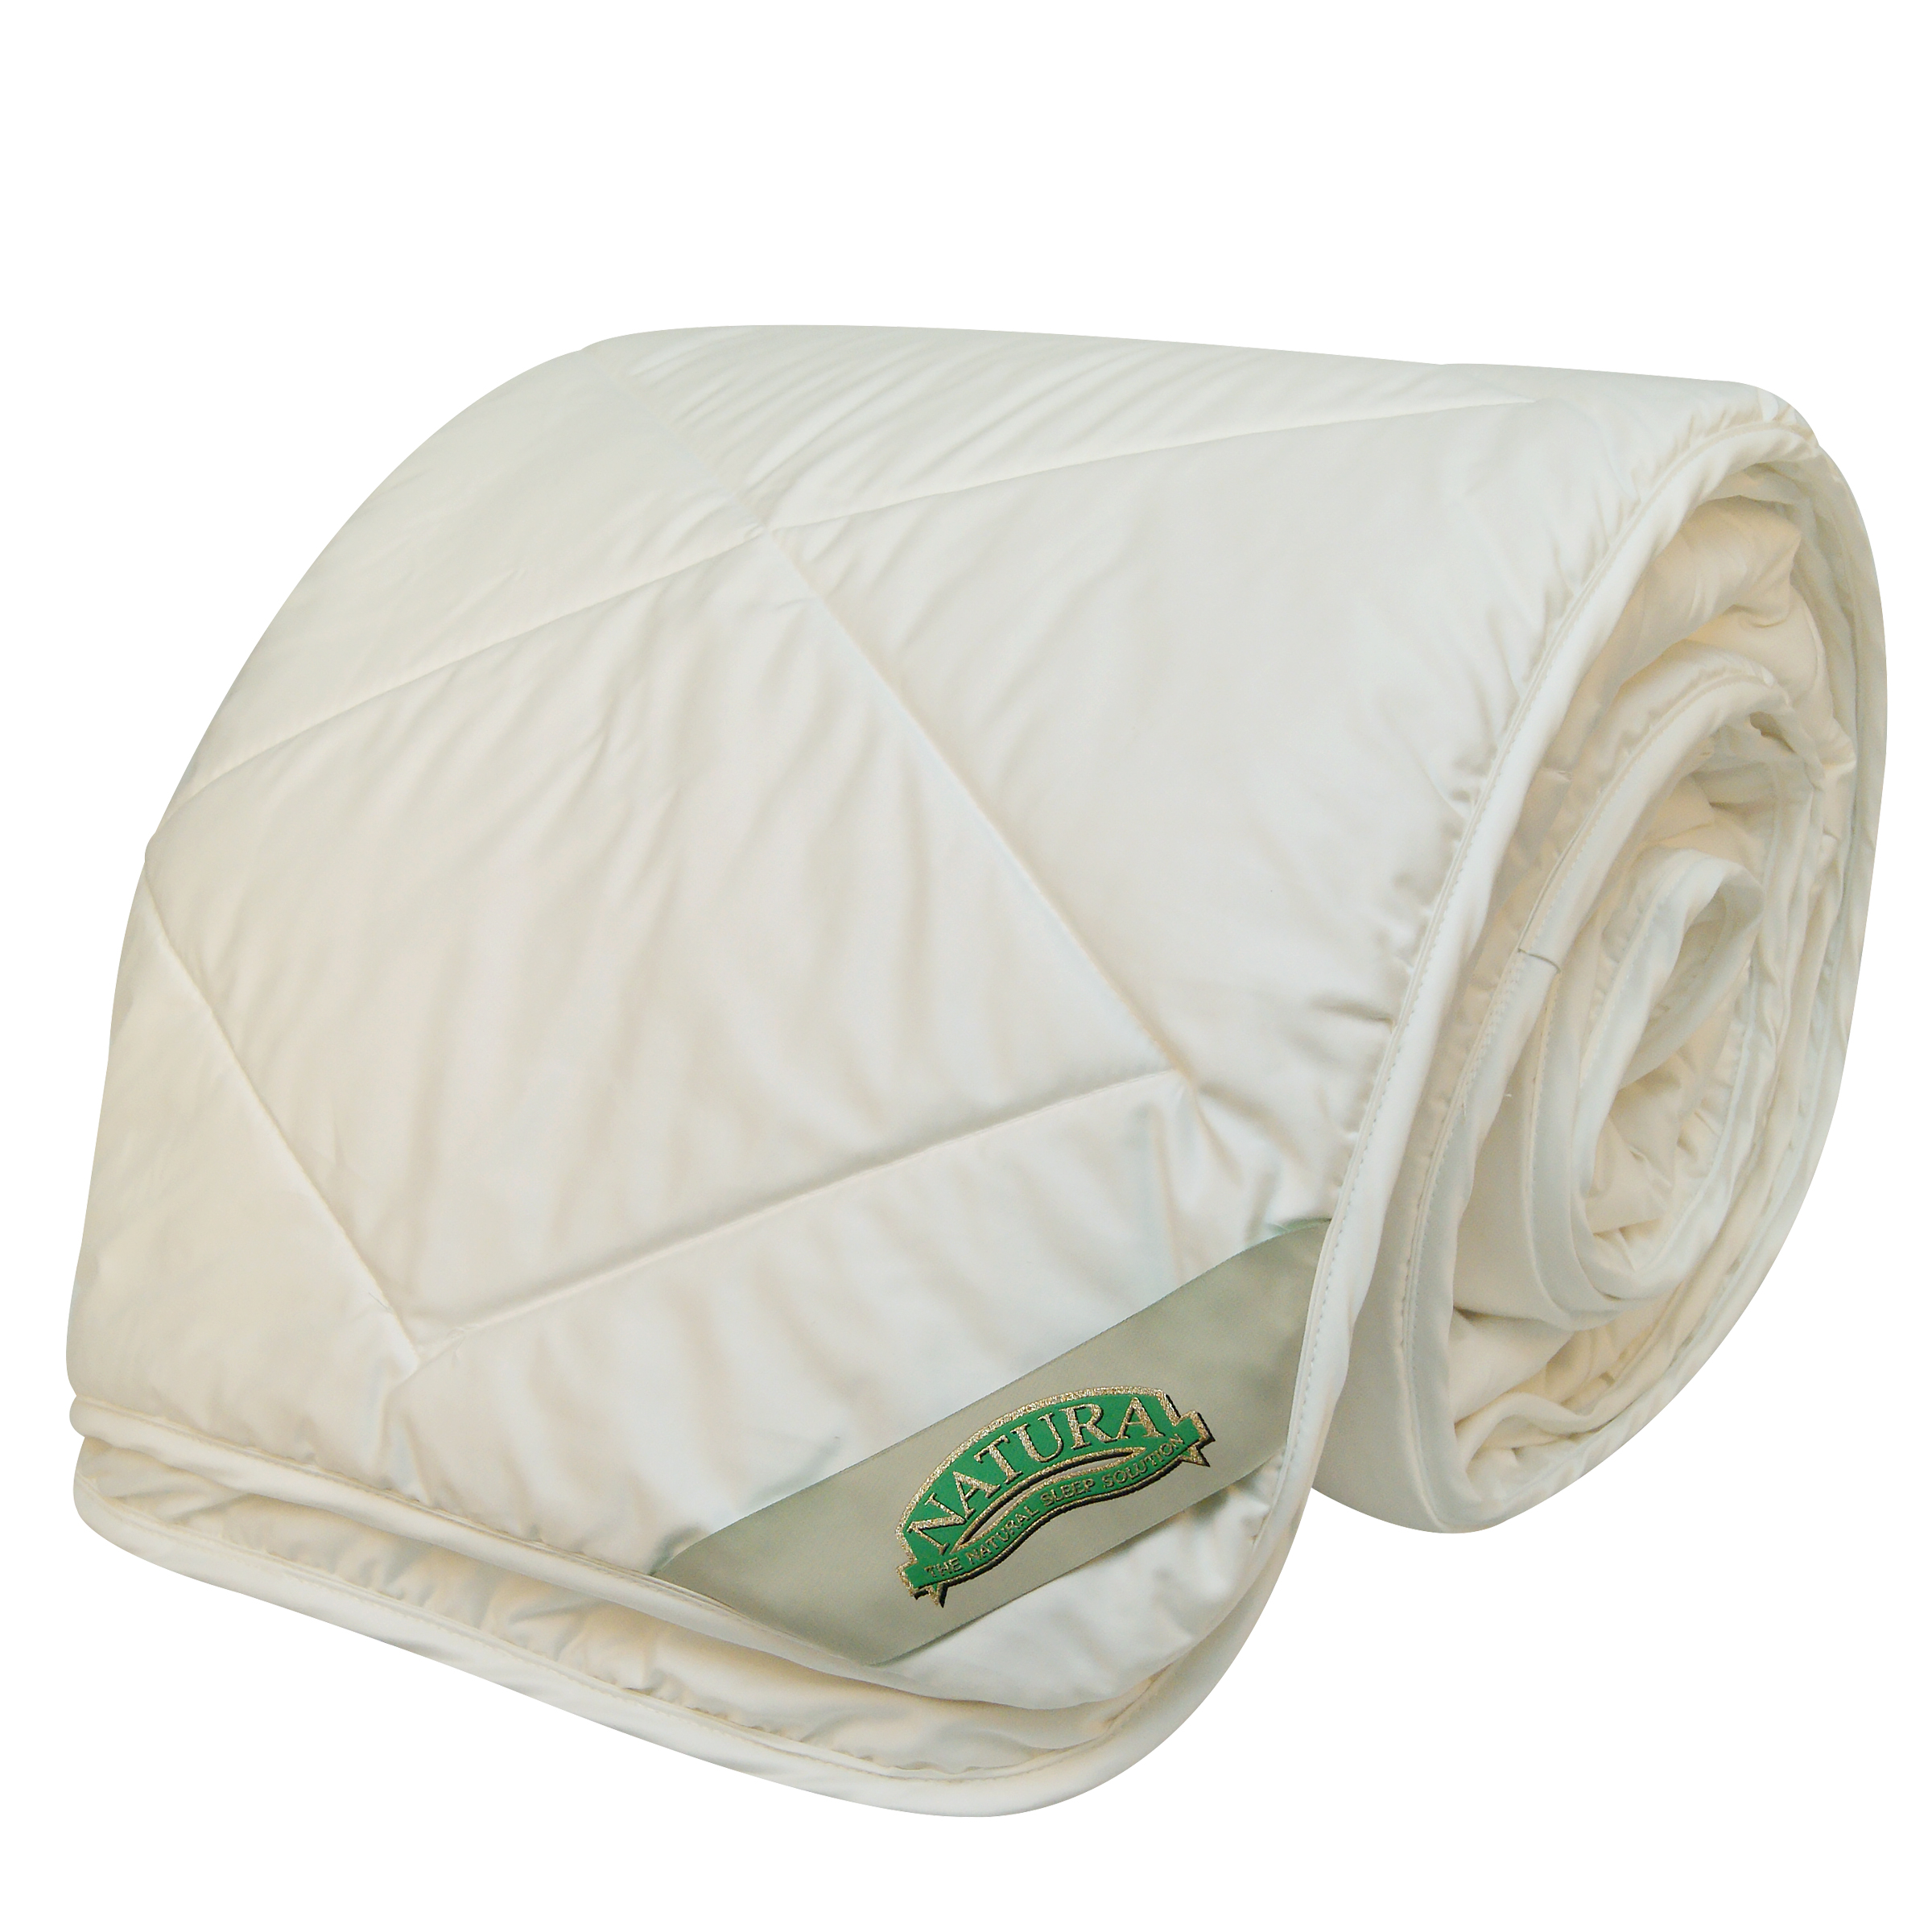 Natura Washable Wool Comforter - Futon d’or - Natural mattresses